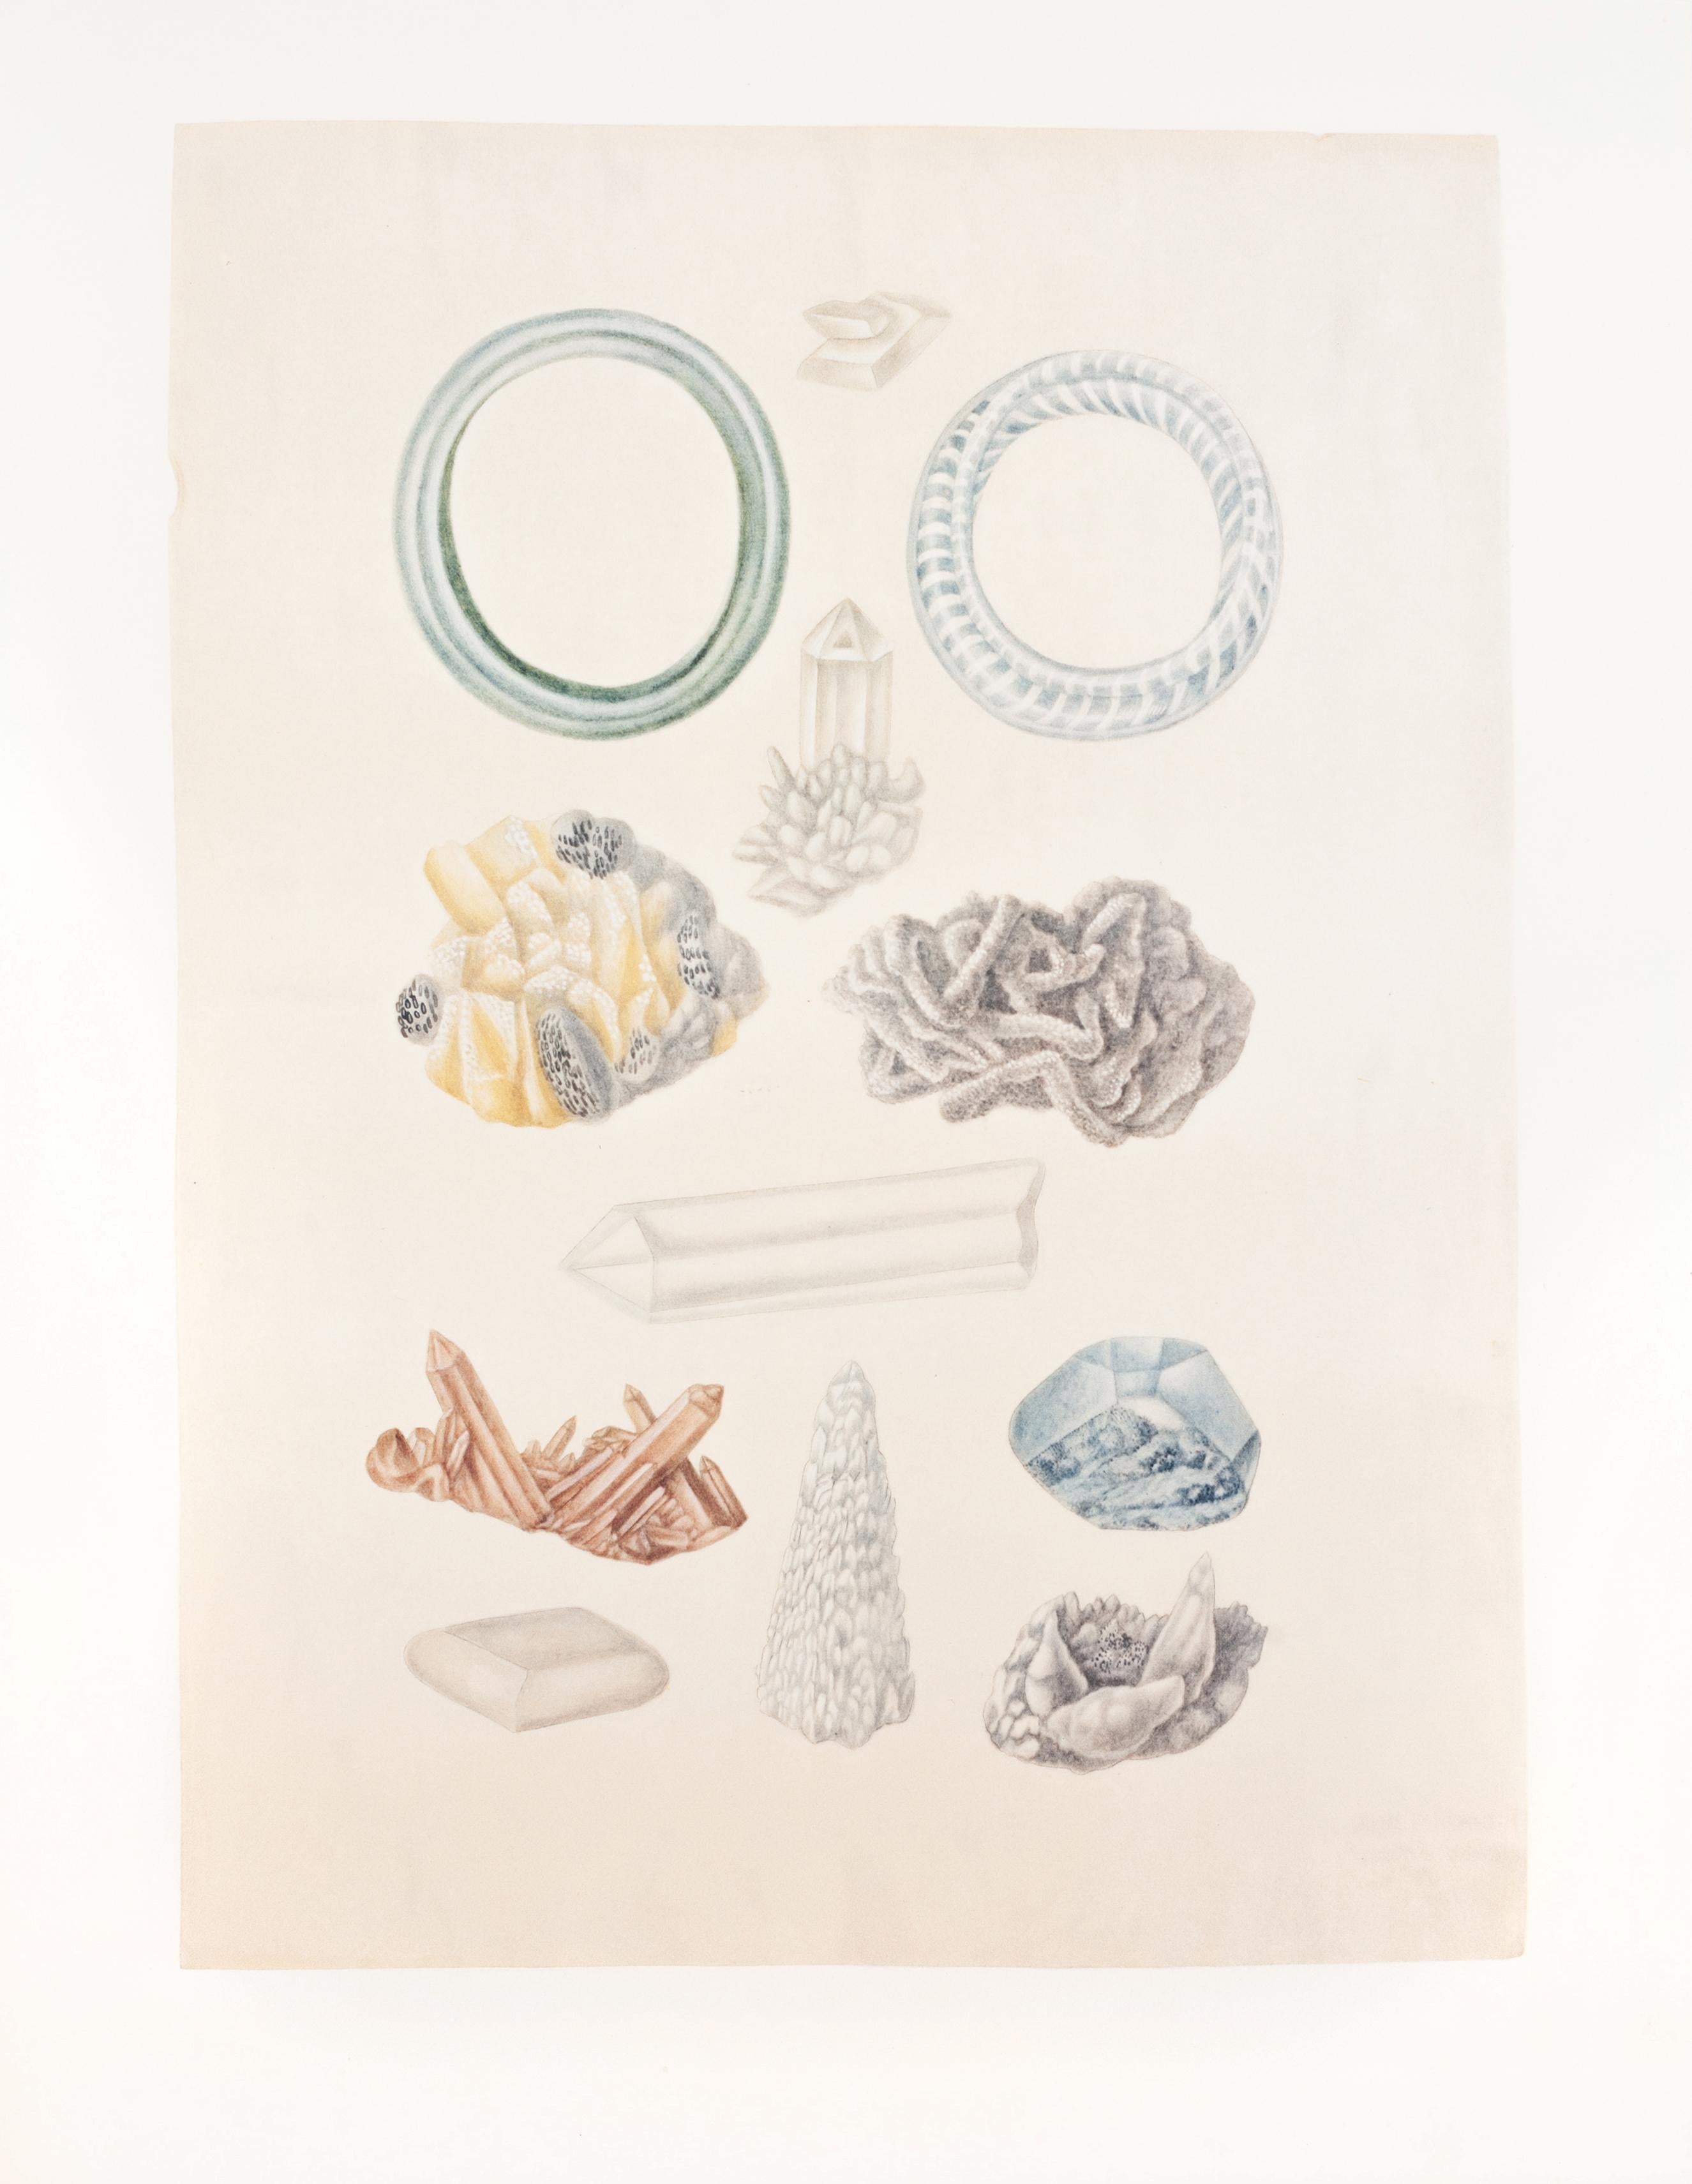 22. Bangles, Minerals - Print by Maria Sybilla Merian